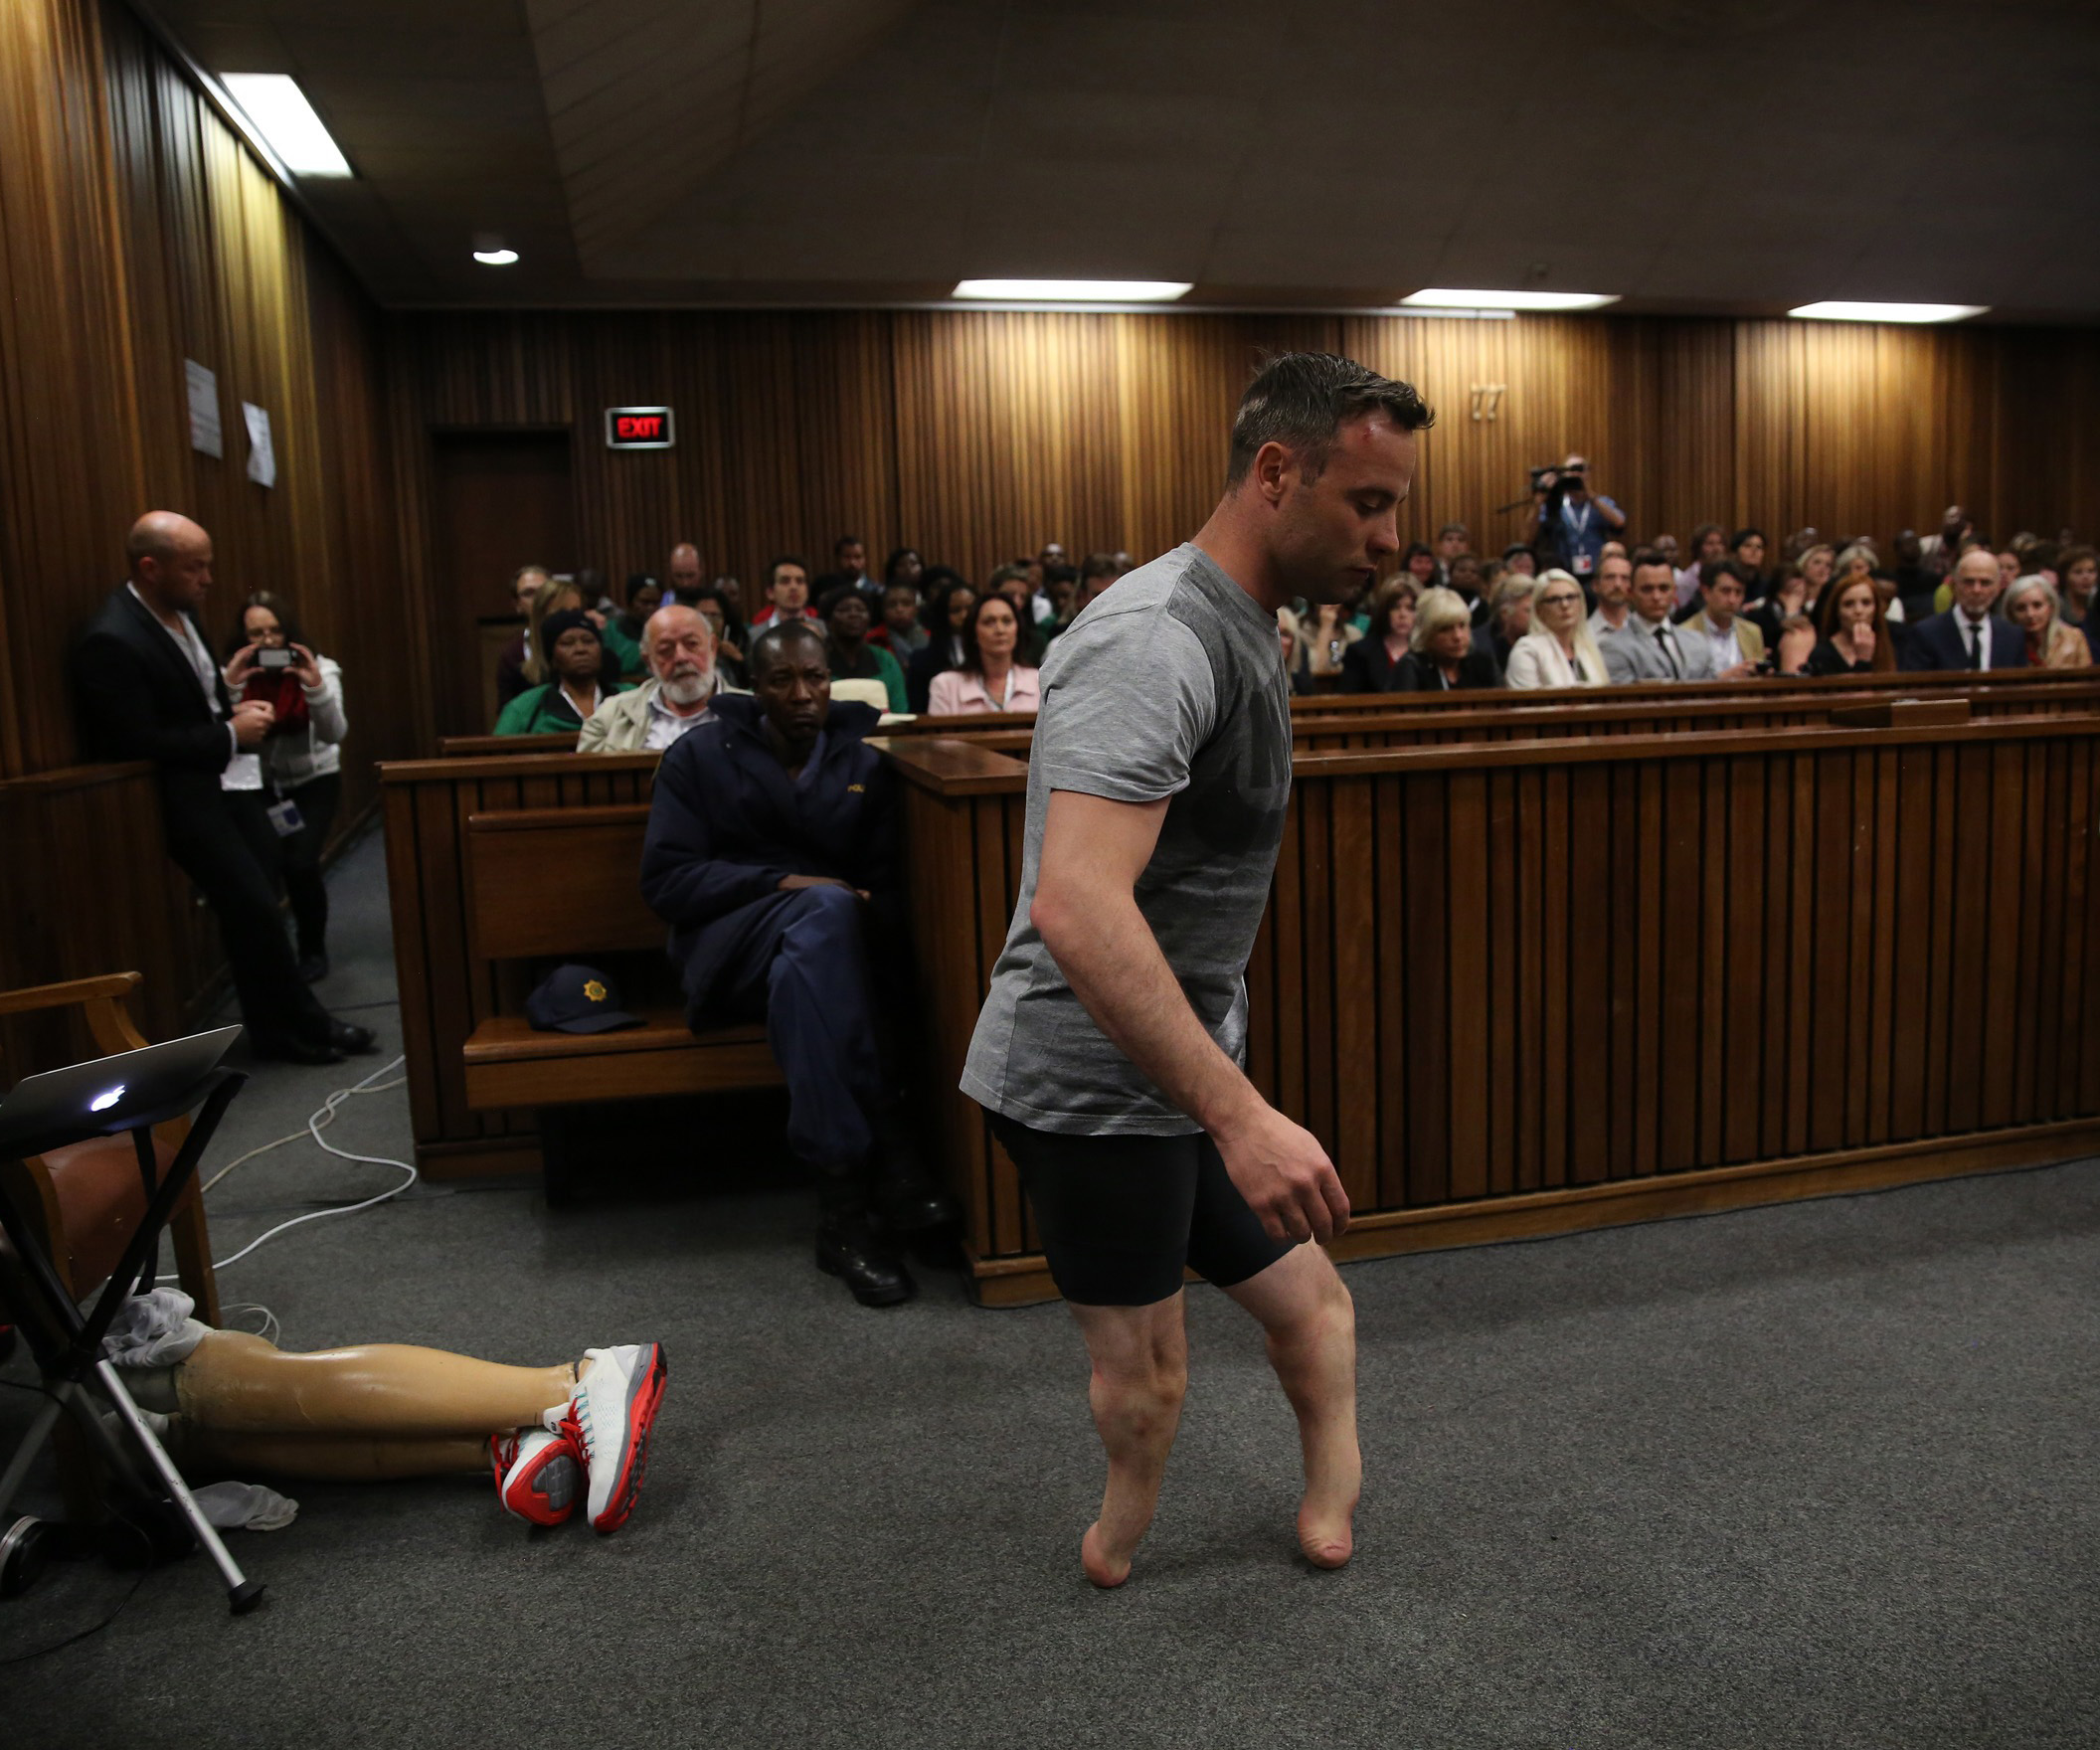 Oscar Pistorius walks without prosthetics in court to show ‘vulnerability’